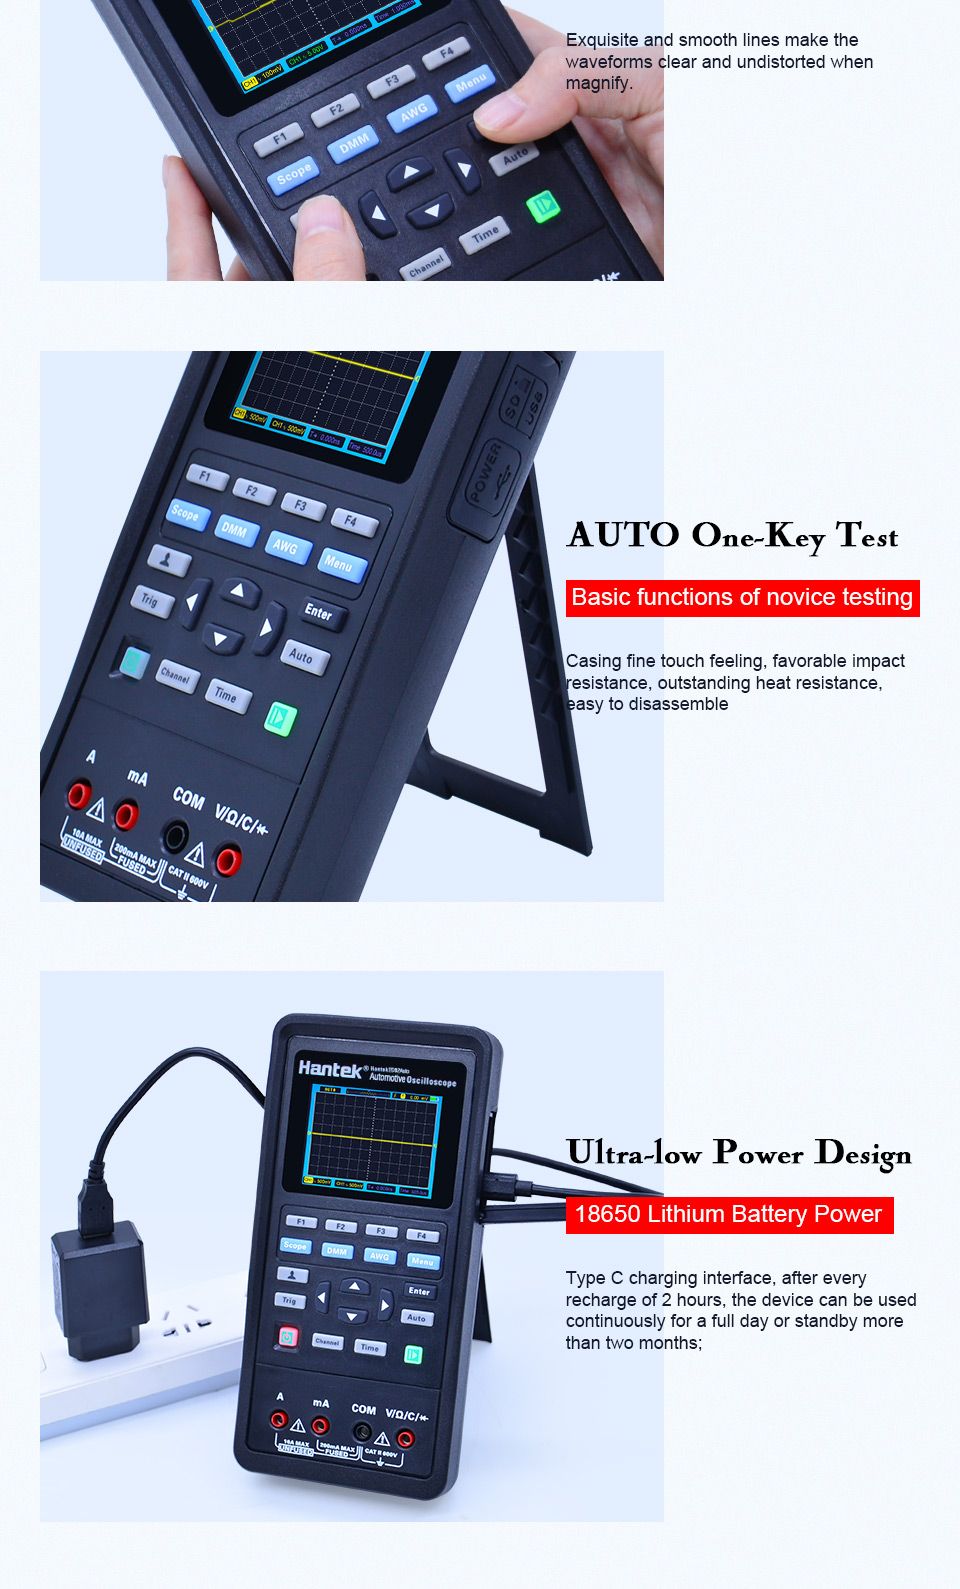 Hantek-2D82-AUTO-Digital-Oscilloscope-Multimeter-4-in1-2-Channels-80MHz-Signal-Source-Automotive-Dia-1721797